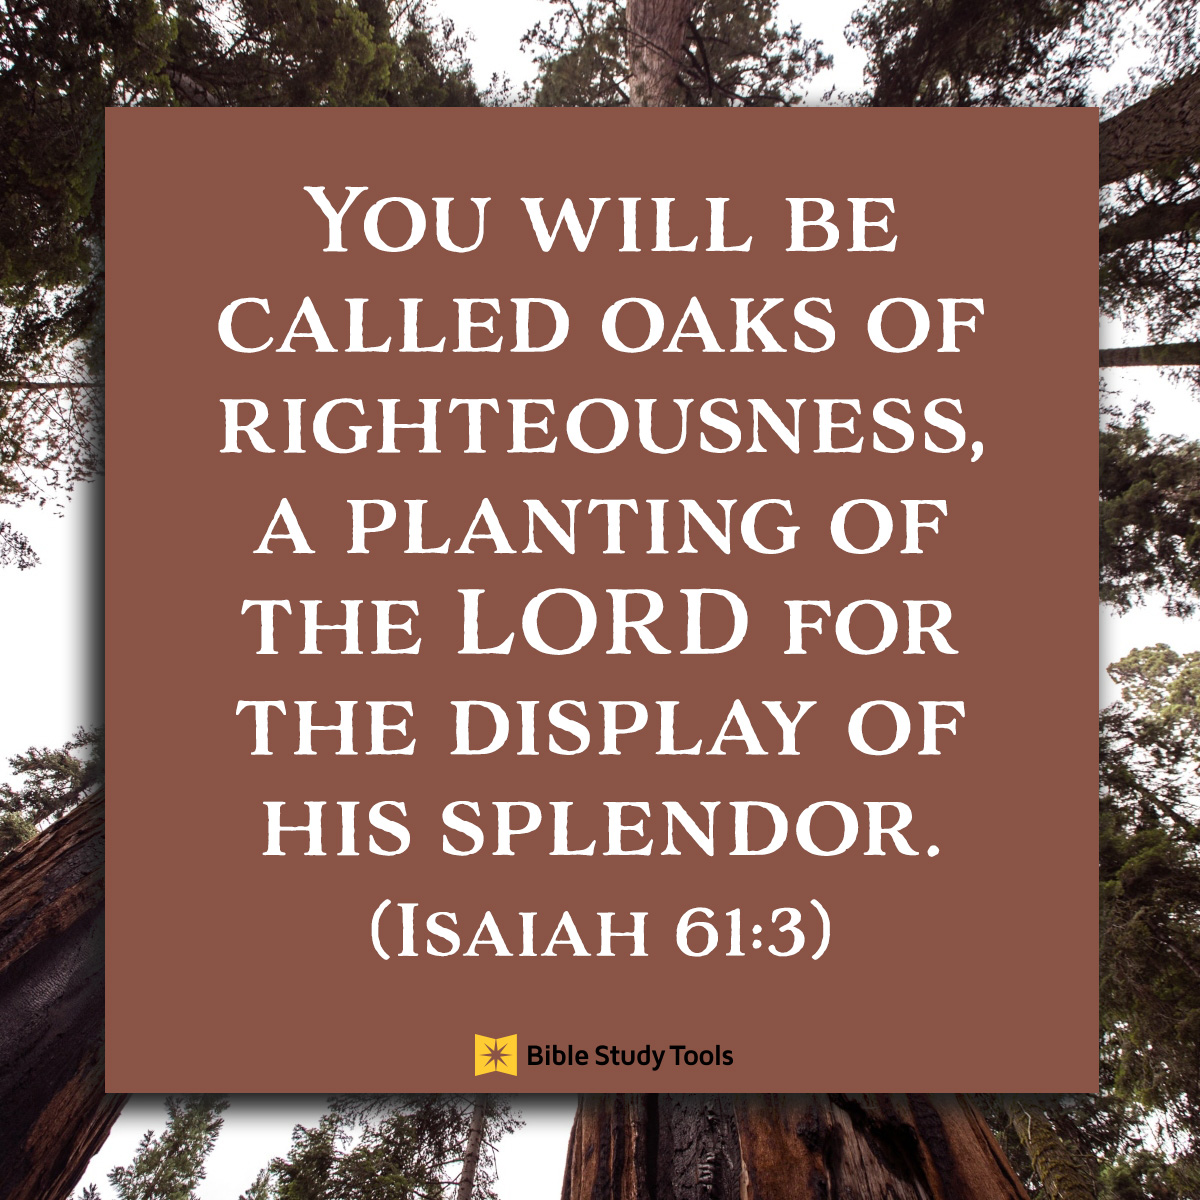 Isaiah 61:3, inspirational image